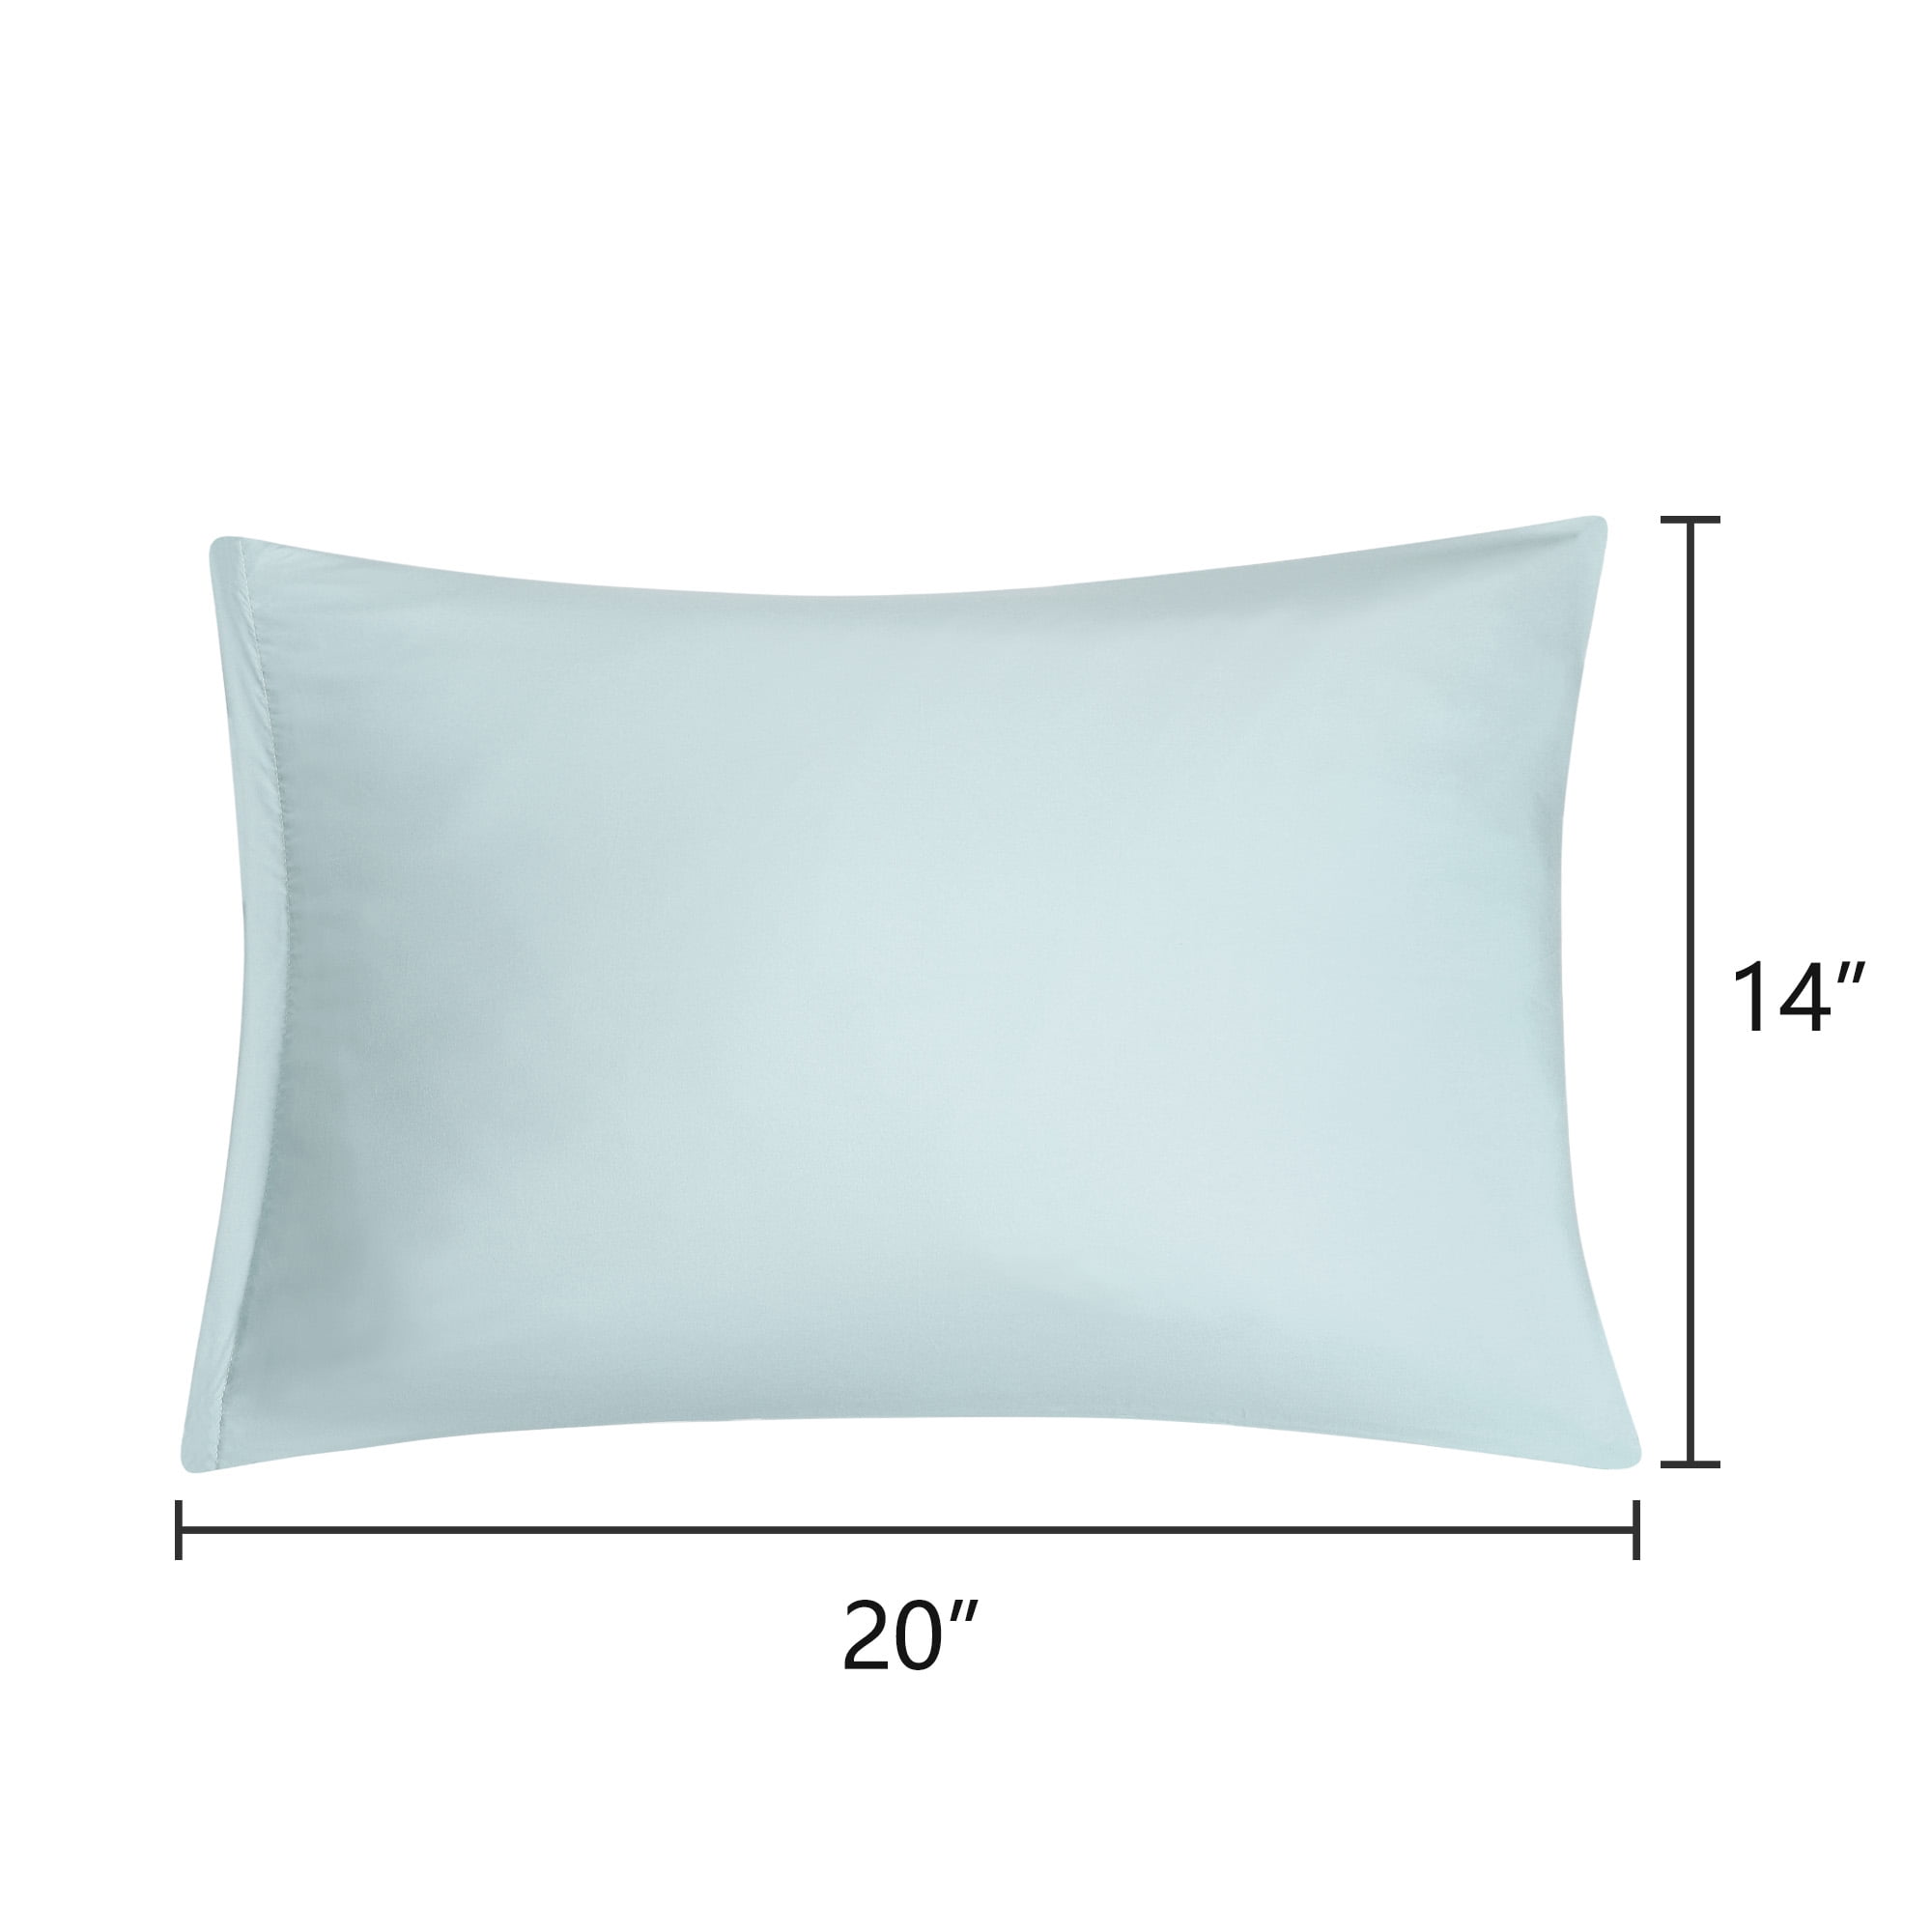 Body Pillow Case, Blush MyPillow Pillowcase